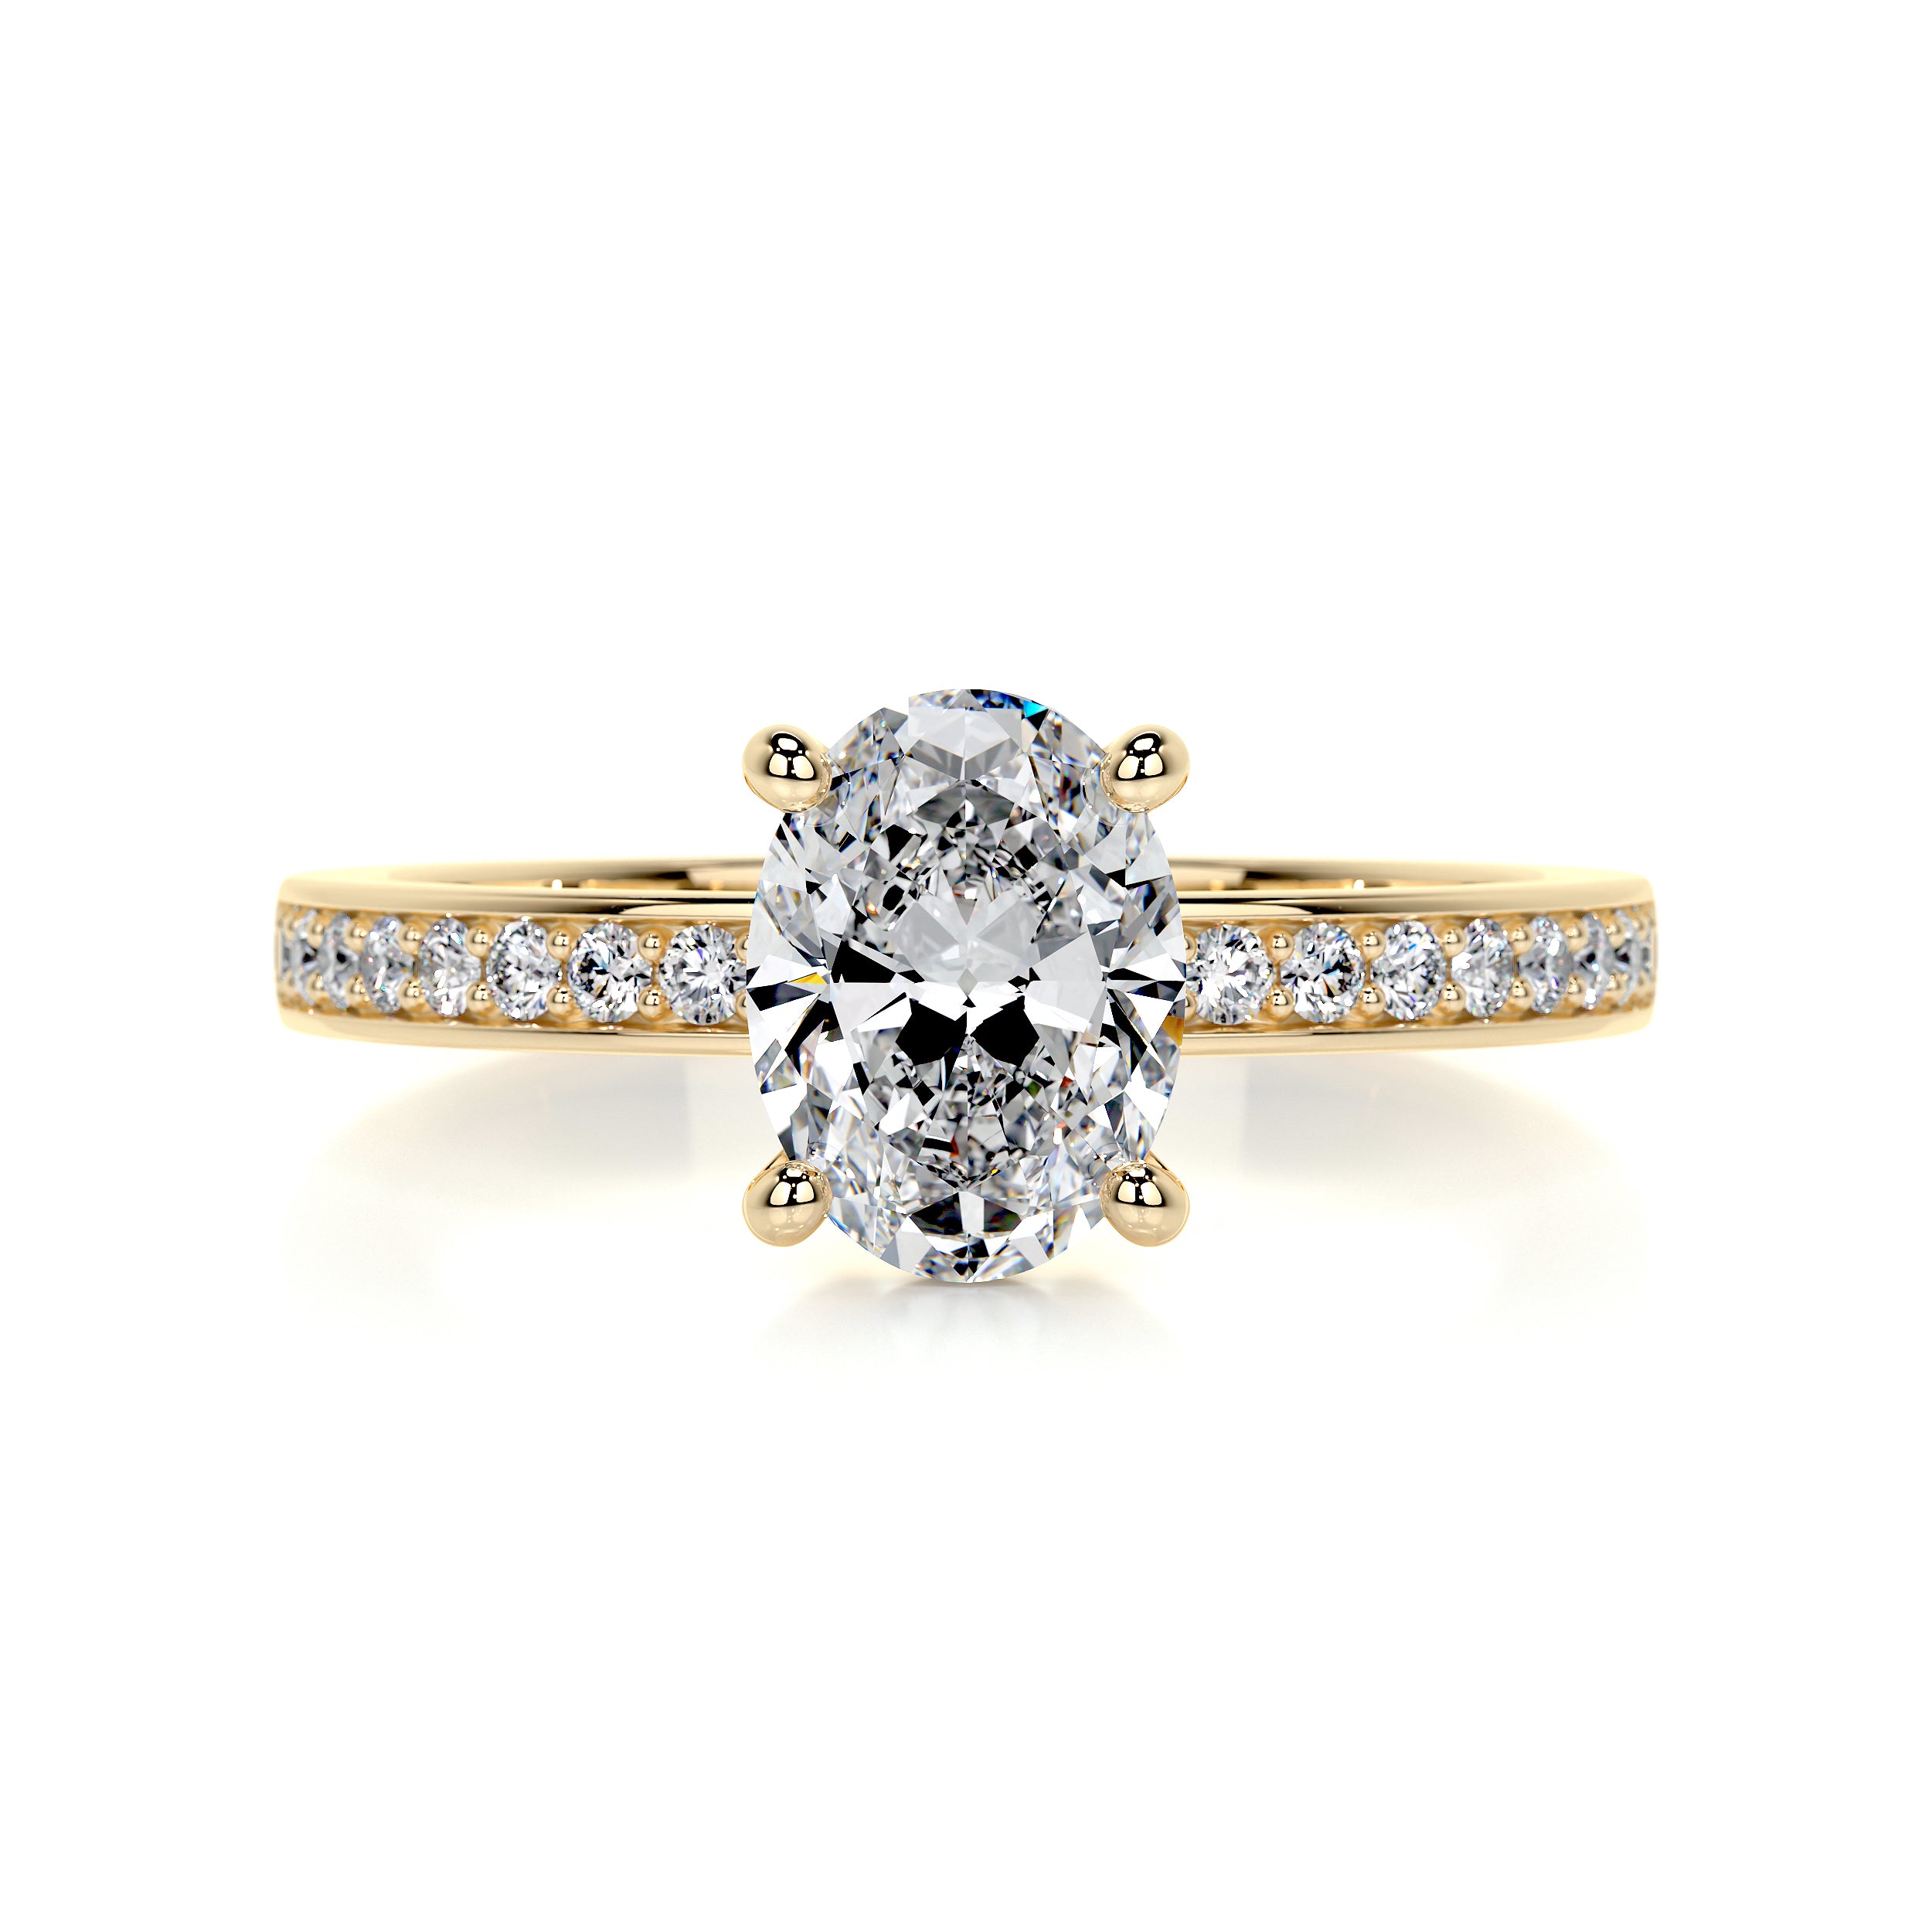 Giselle Diamond Engagement Ring   (1.16 Carat) -18K Yellow Gold